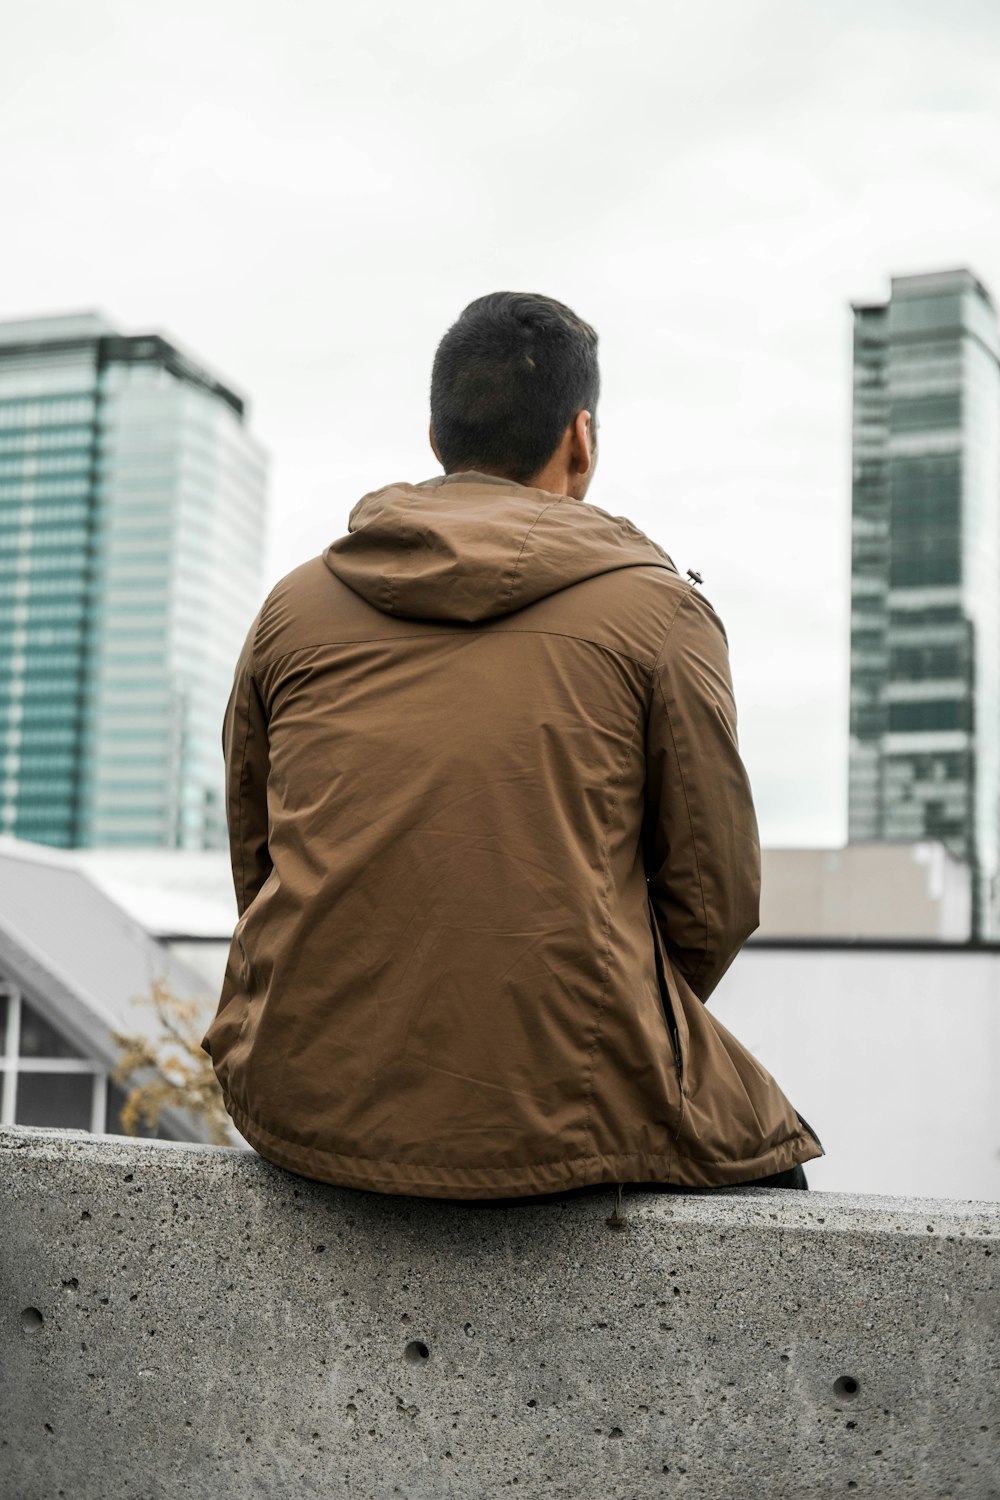 man in brown jacket sitting on concrete bench during daytime